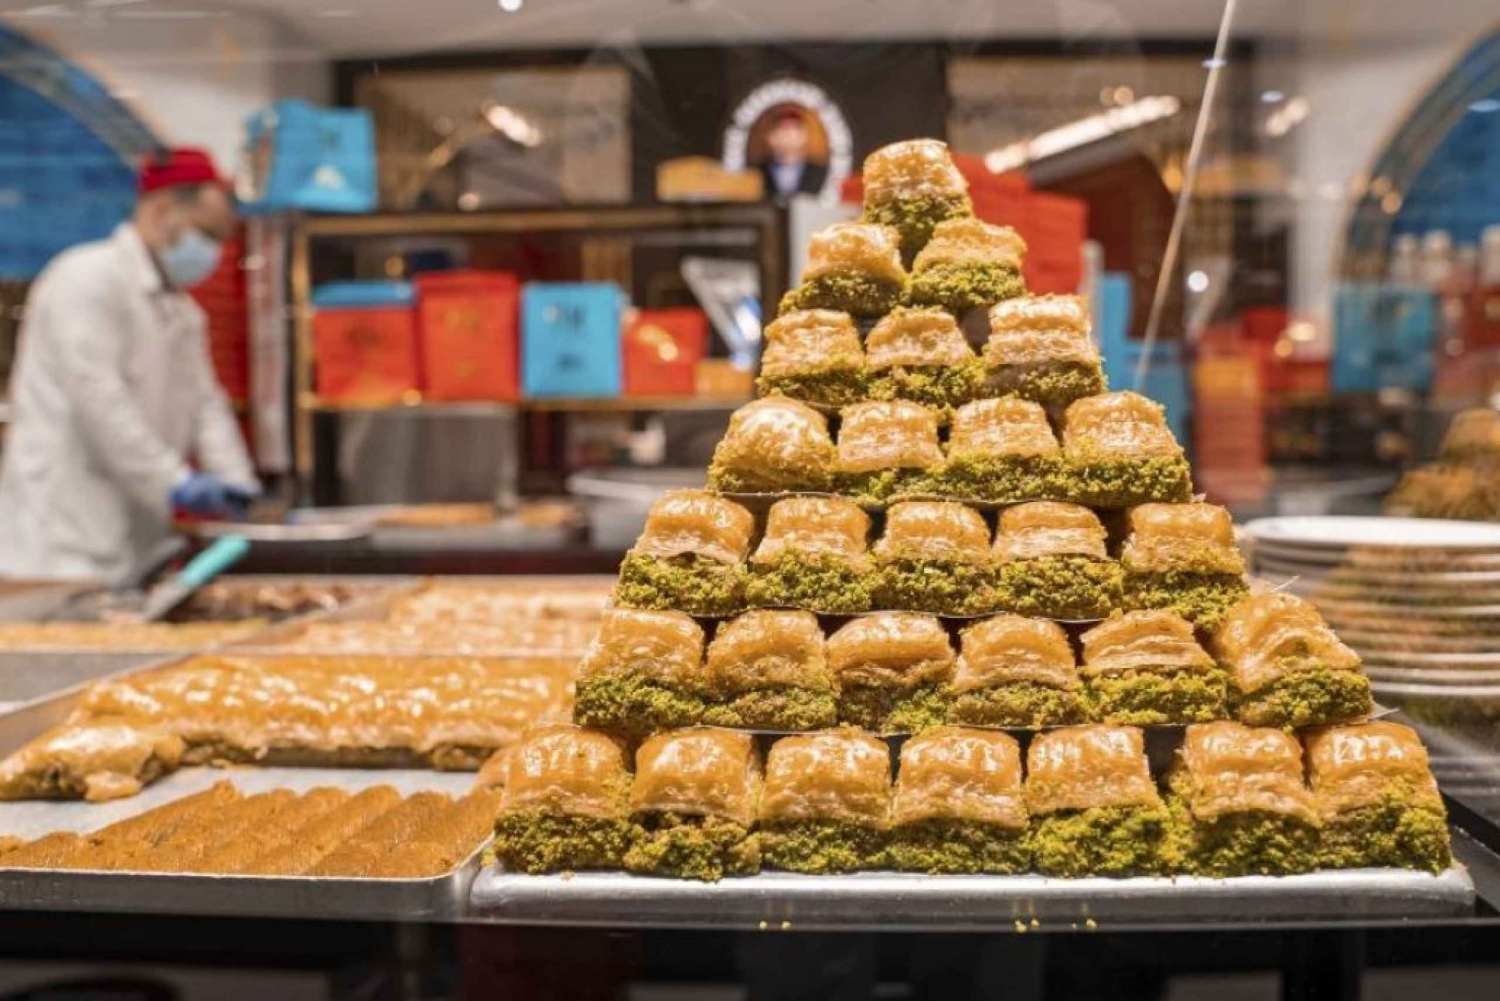 Dubai Insider Food Tour: Private & 100% Personalized